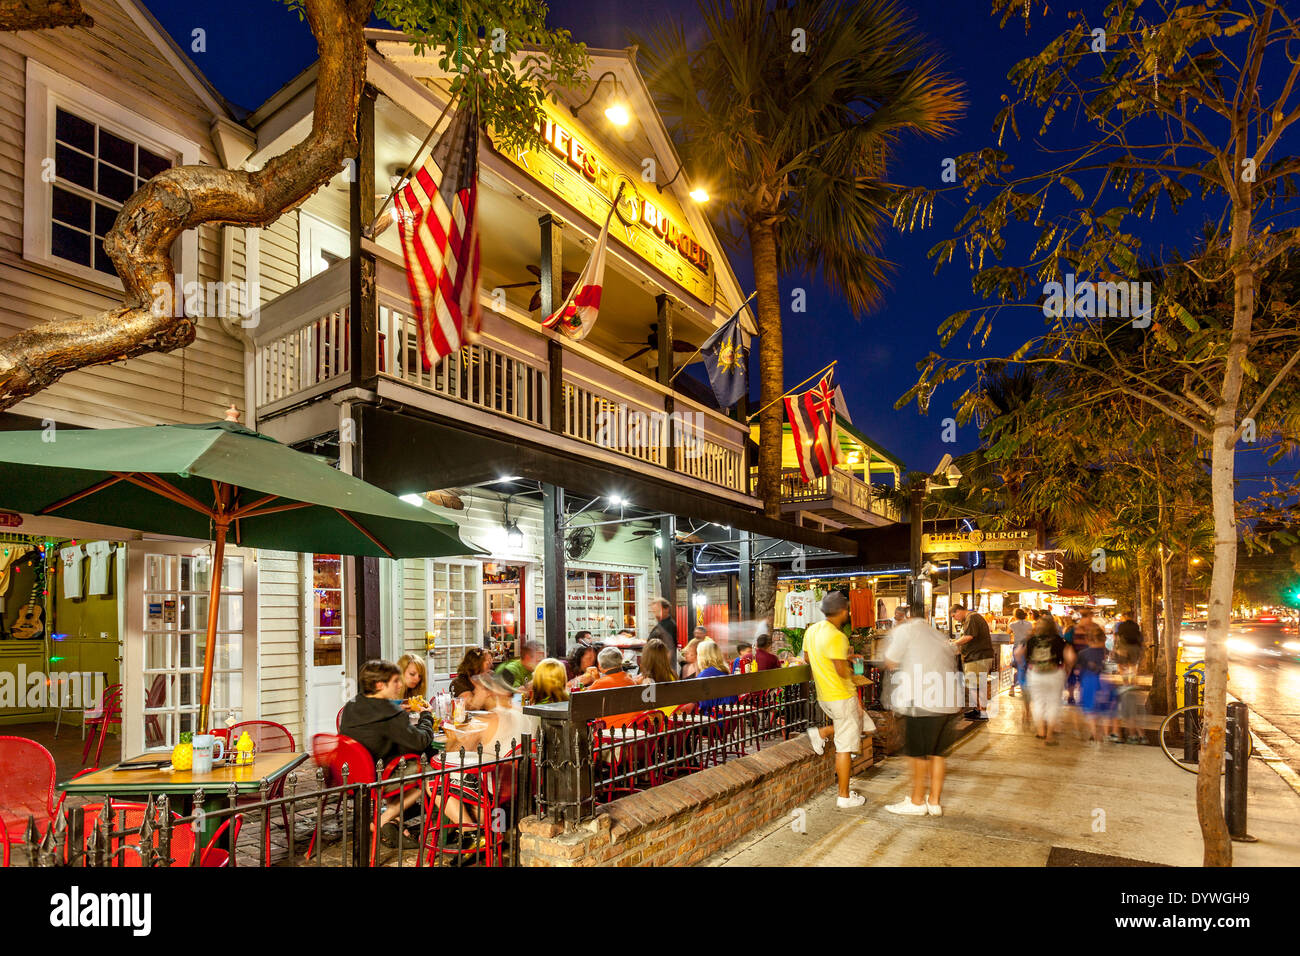 Cafe/Restaurant, Duval Street, Key West, Florida, USA Stockfotografie -  Alamy